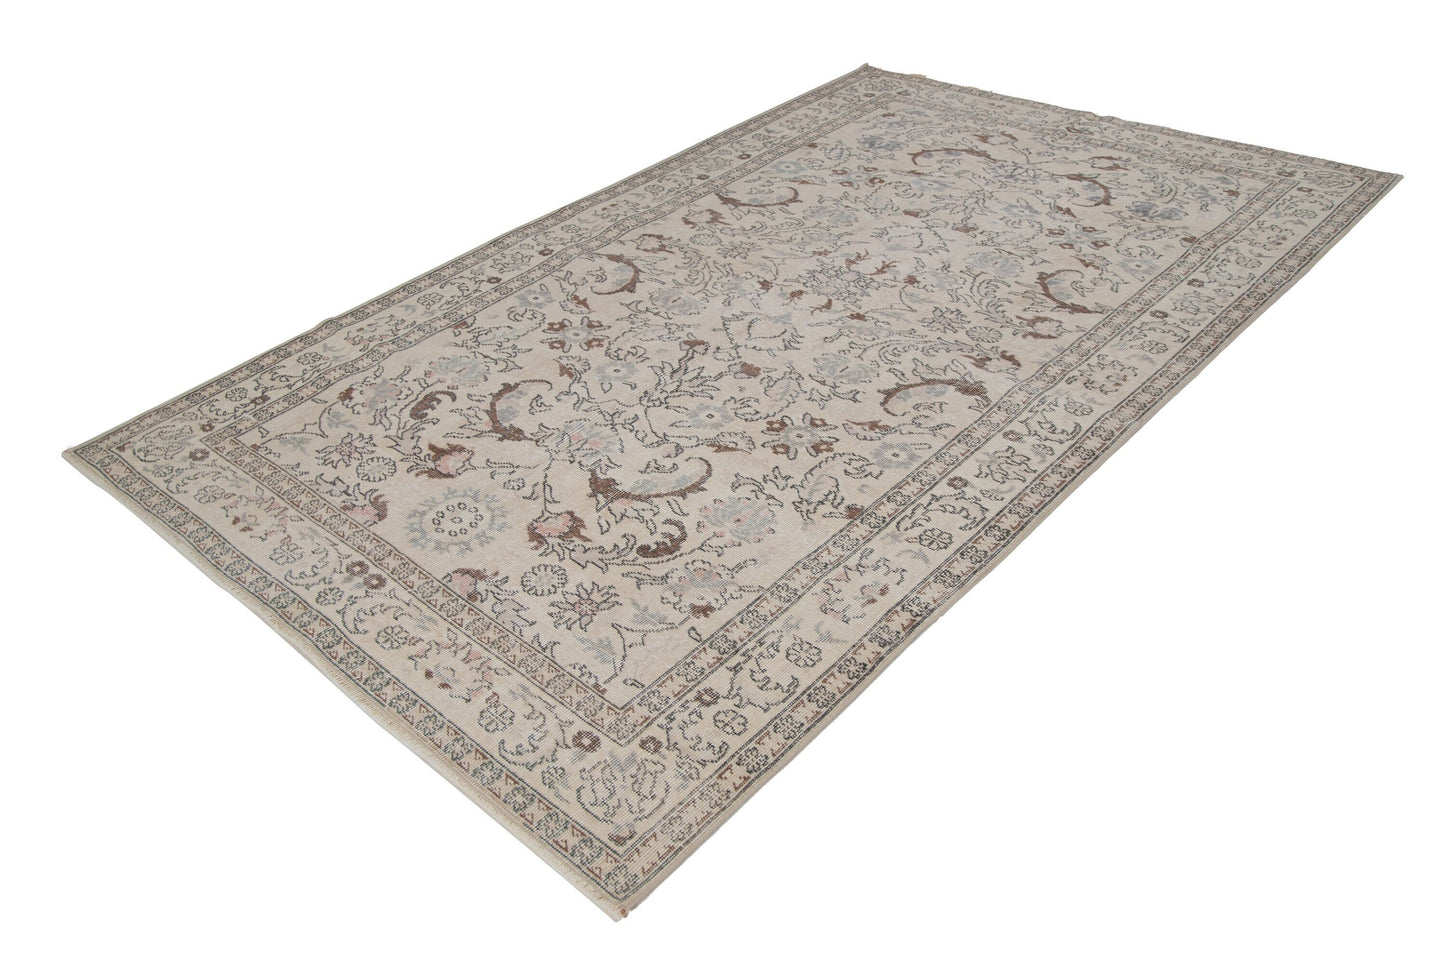 Rug 6x9,Area Turkish rug 6x9, Neutral Oushak rug,Vintage rug,Beige rug 6x9,One of a kind rug,Contemporary,Living room rug,7391